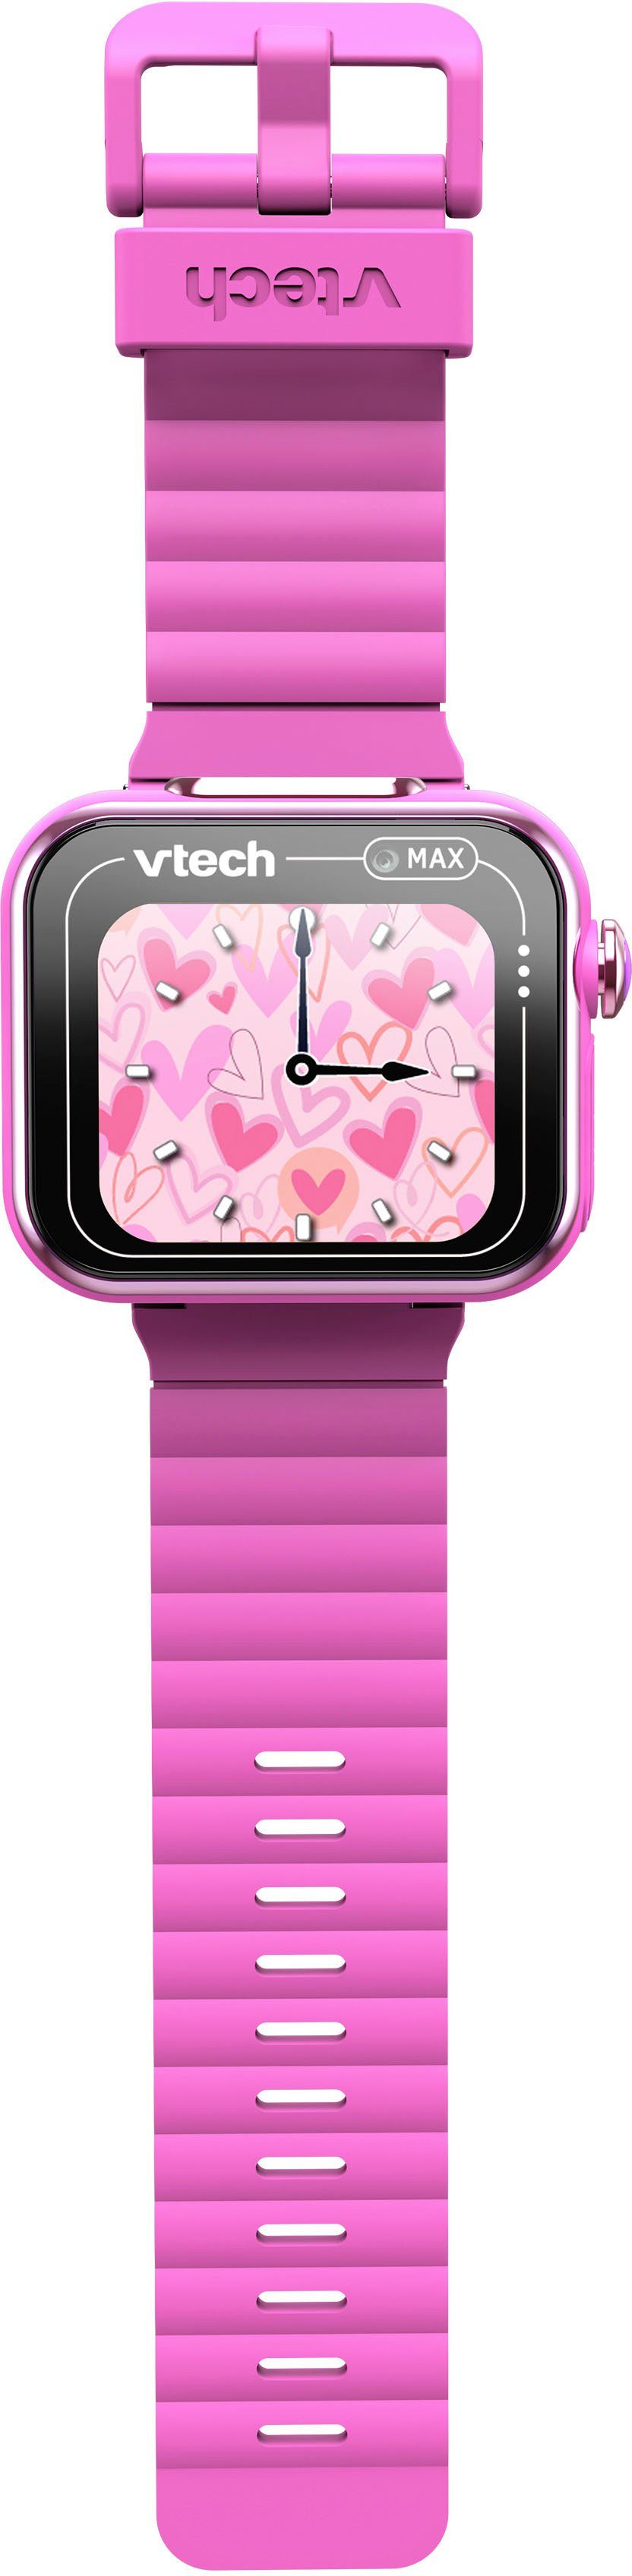 Vtech® Lernspielzeug KidiZoom pink Watch Smart MAX